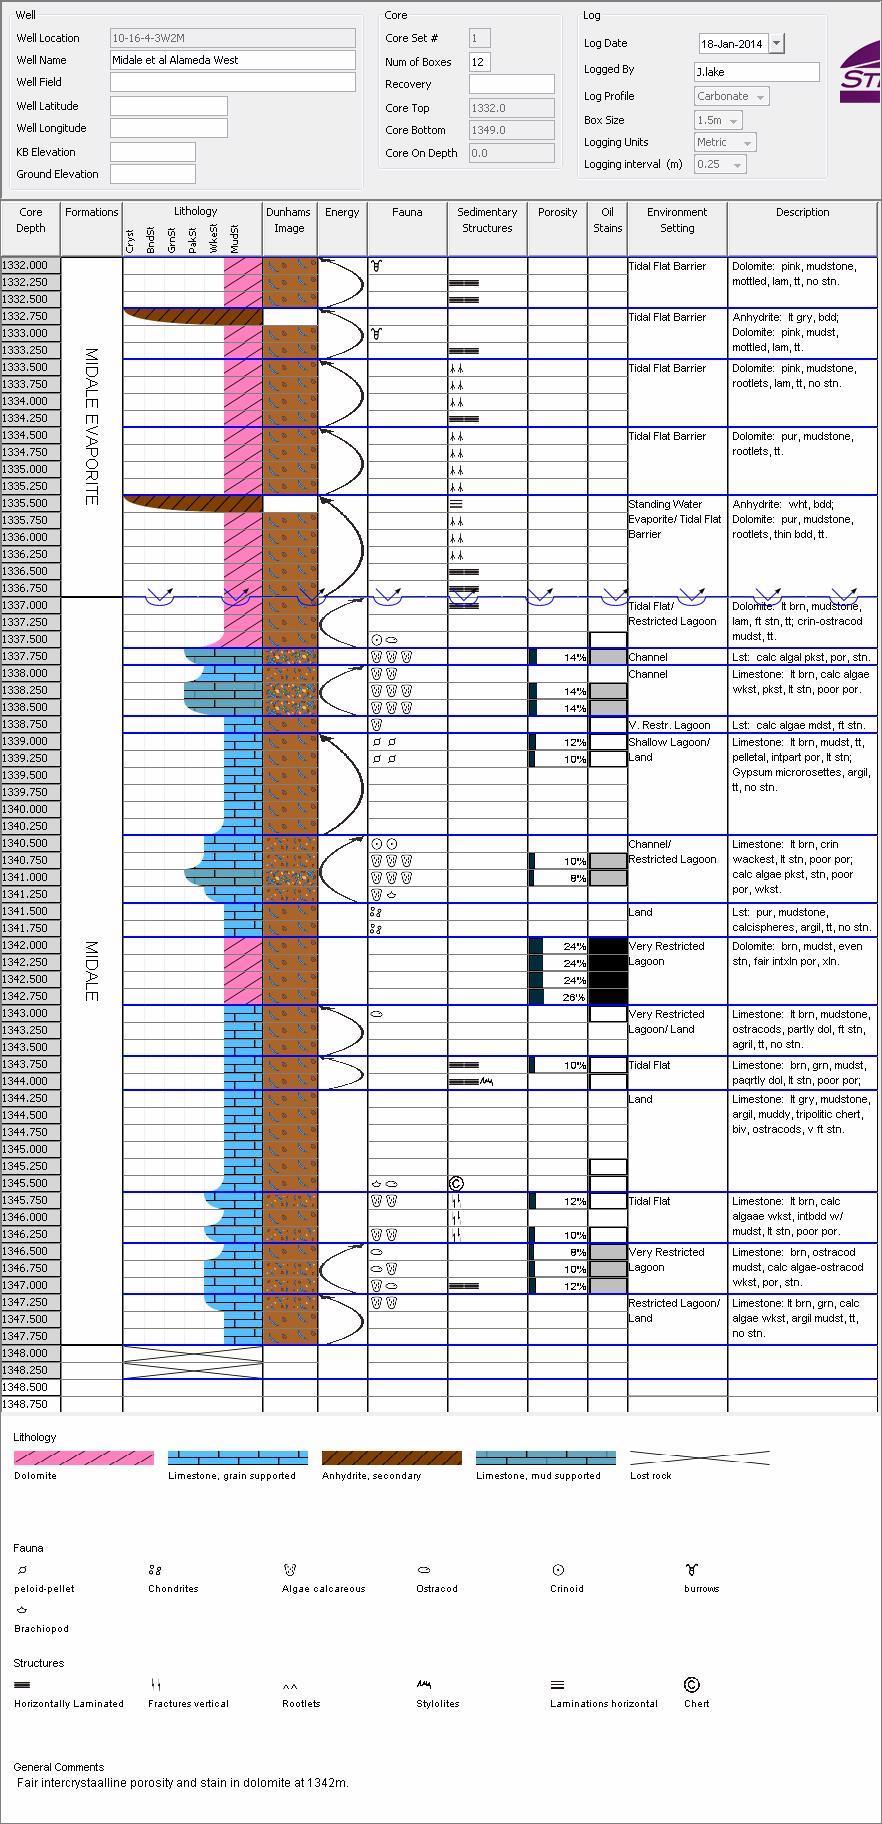 Figure 7 Core description for Midale et al Alameda West 121/10-16-004-03W2M documenting even oil stain and excellent reservoir